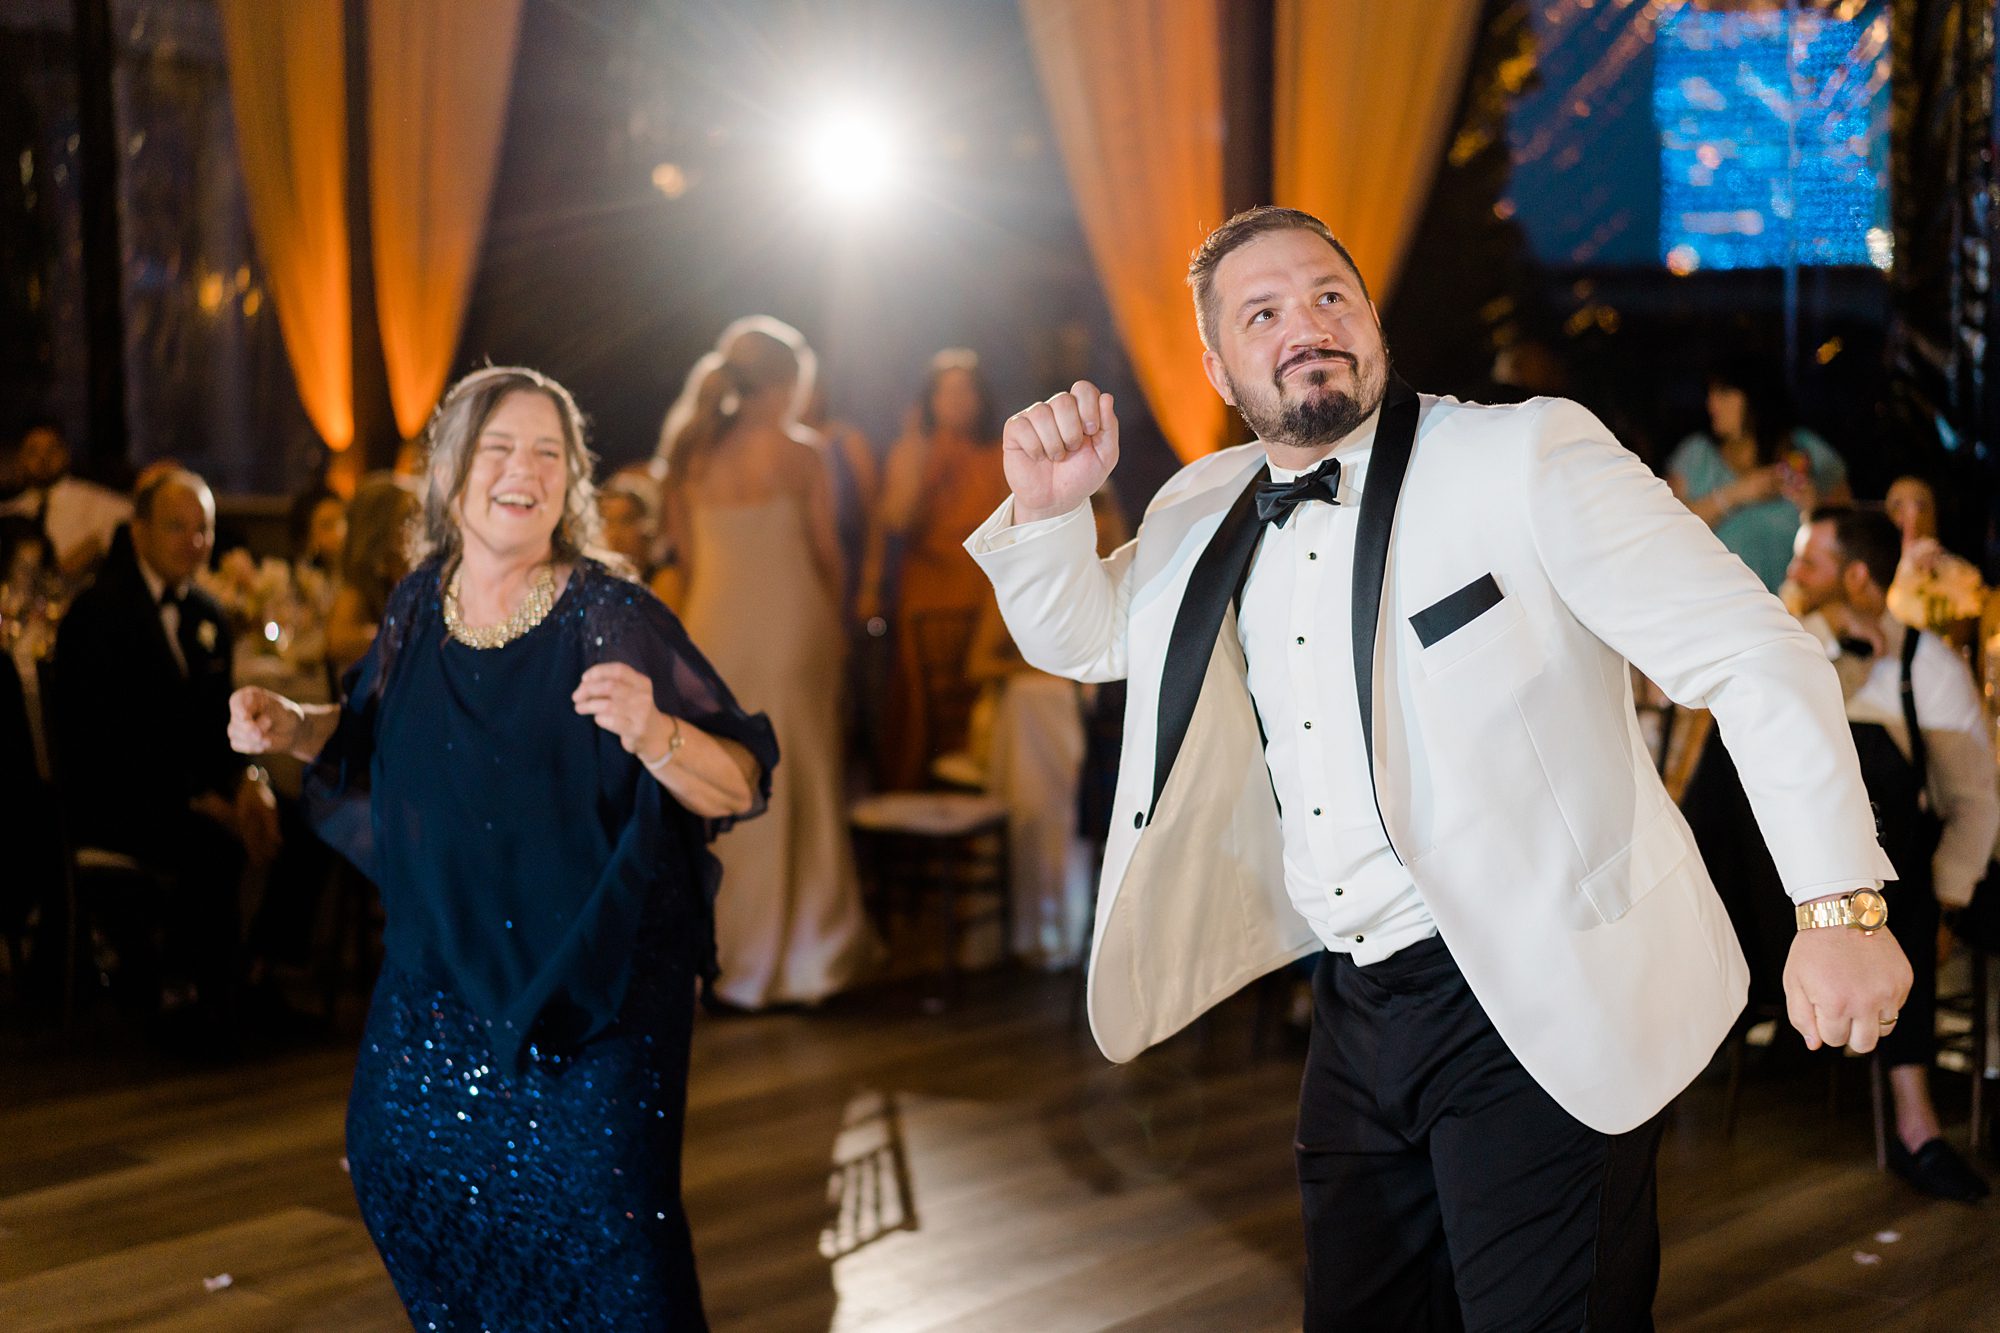 mother + son enjoy a fun dance at wedding reception